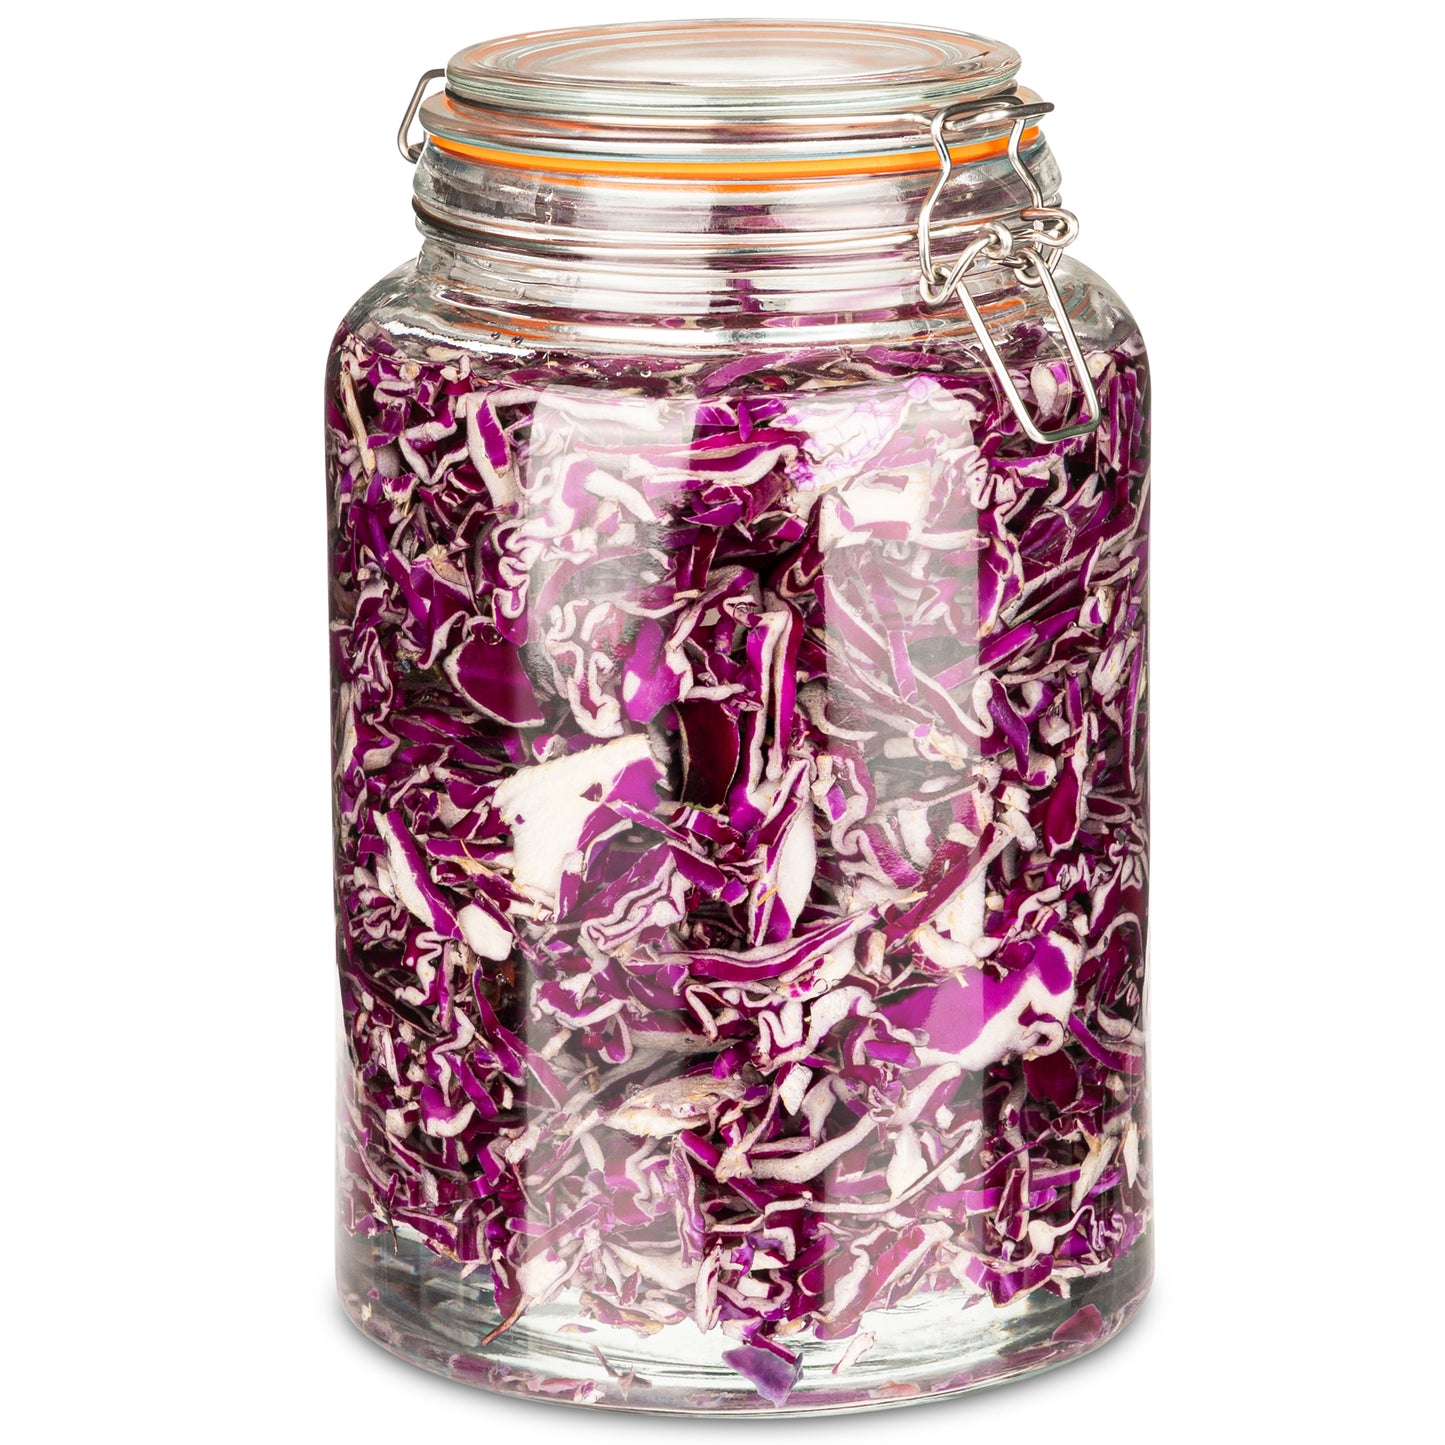 1 Gallon Glass Storage Jar with Clasp Lid